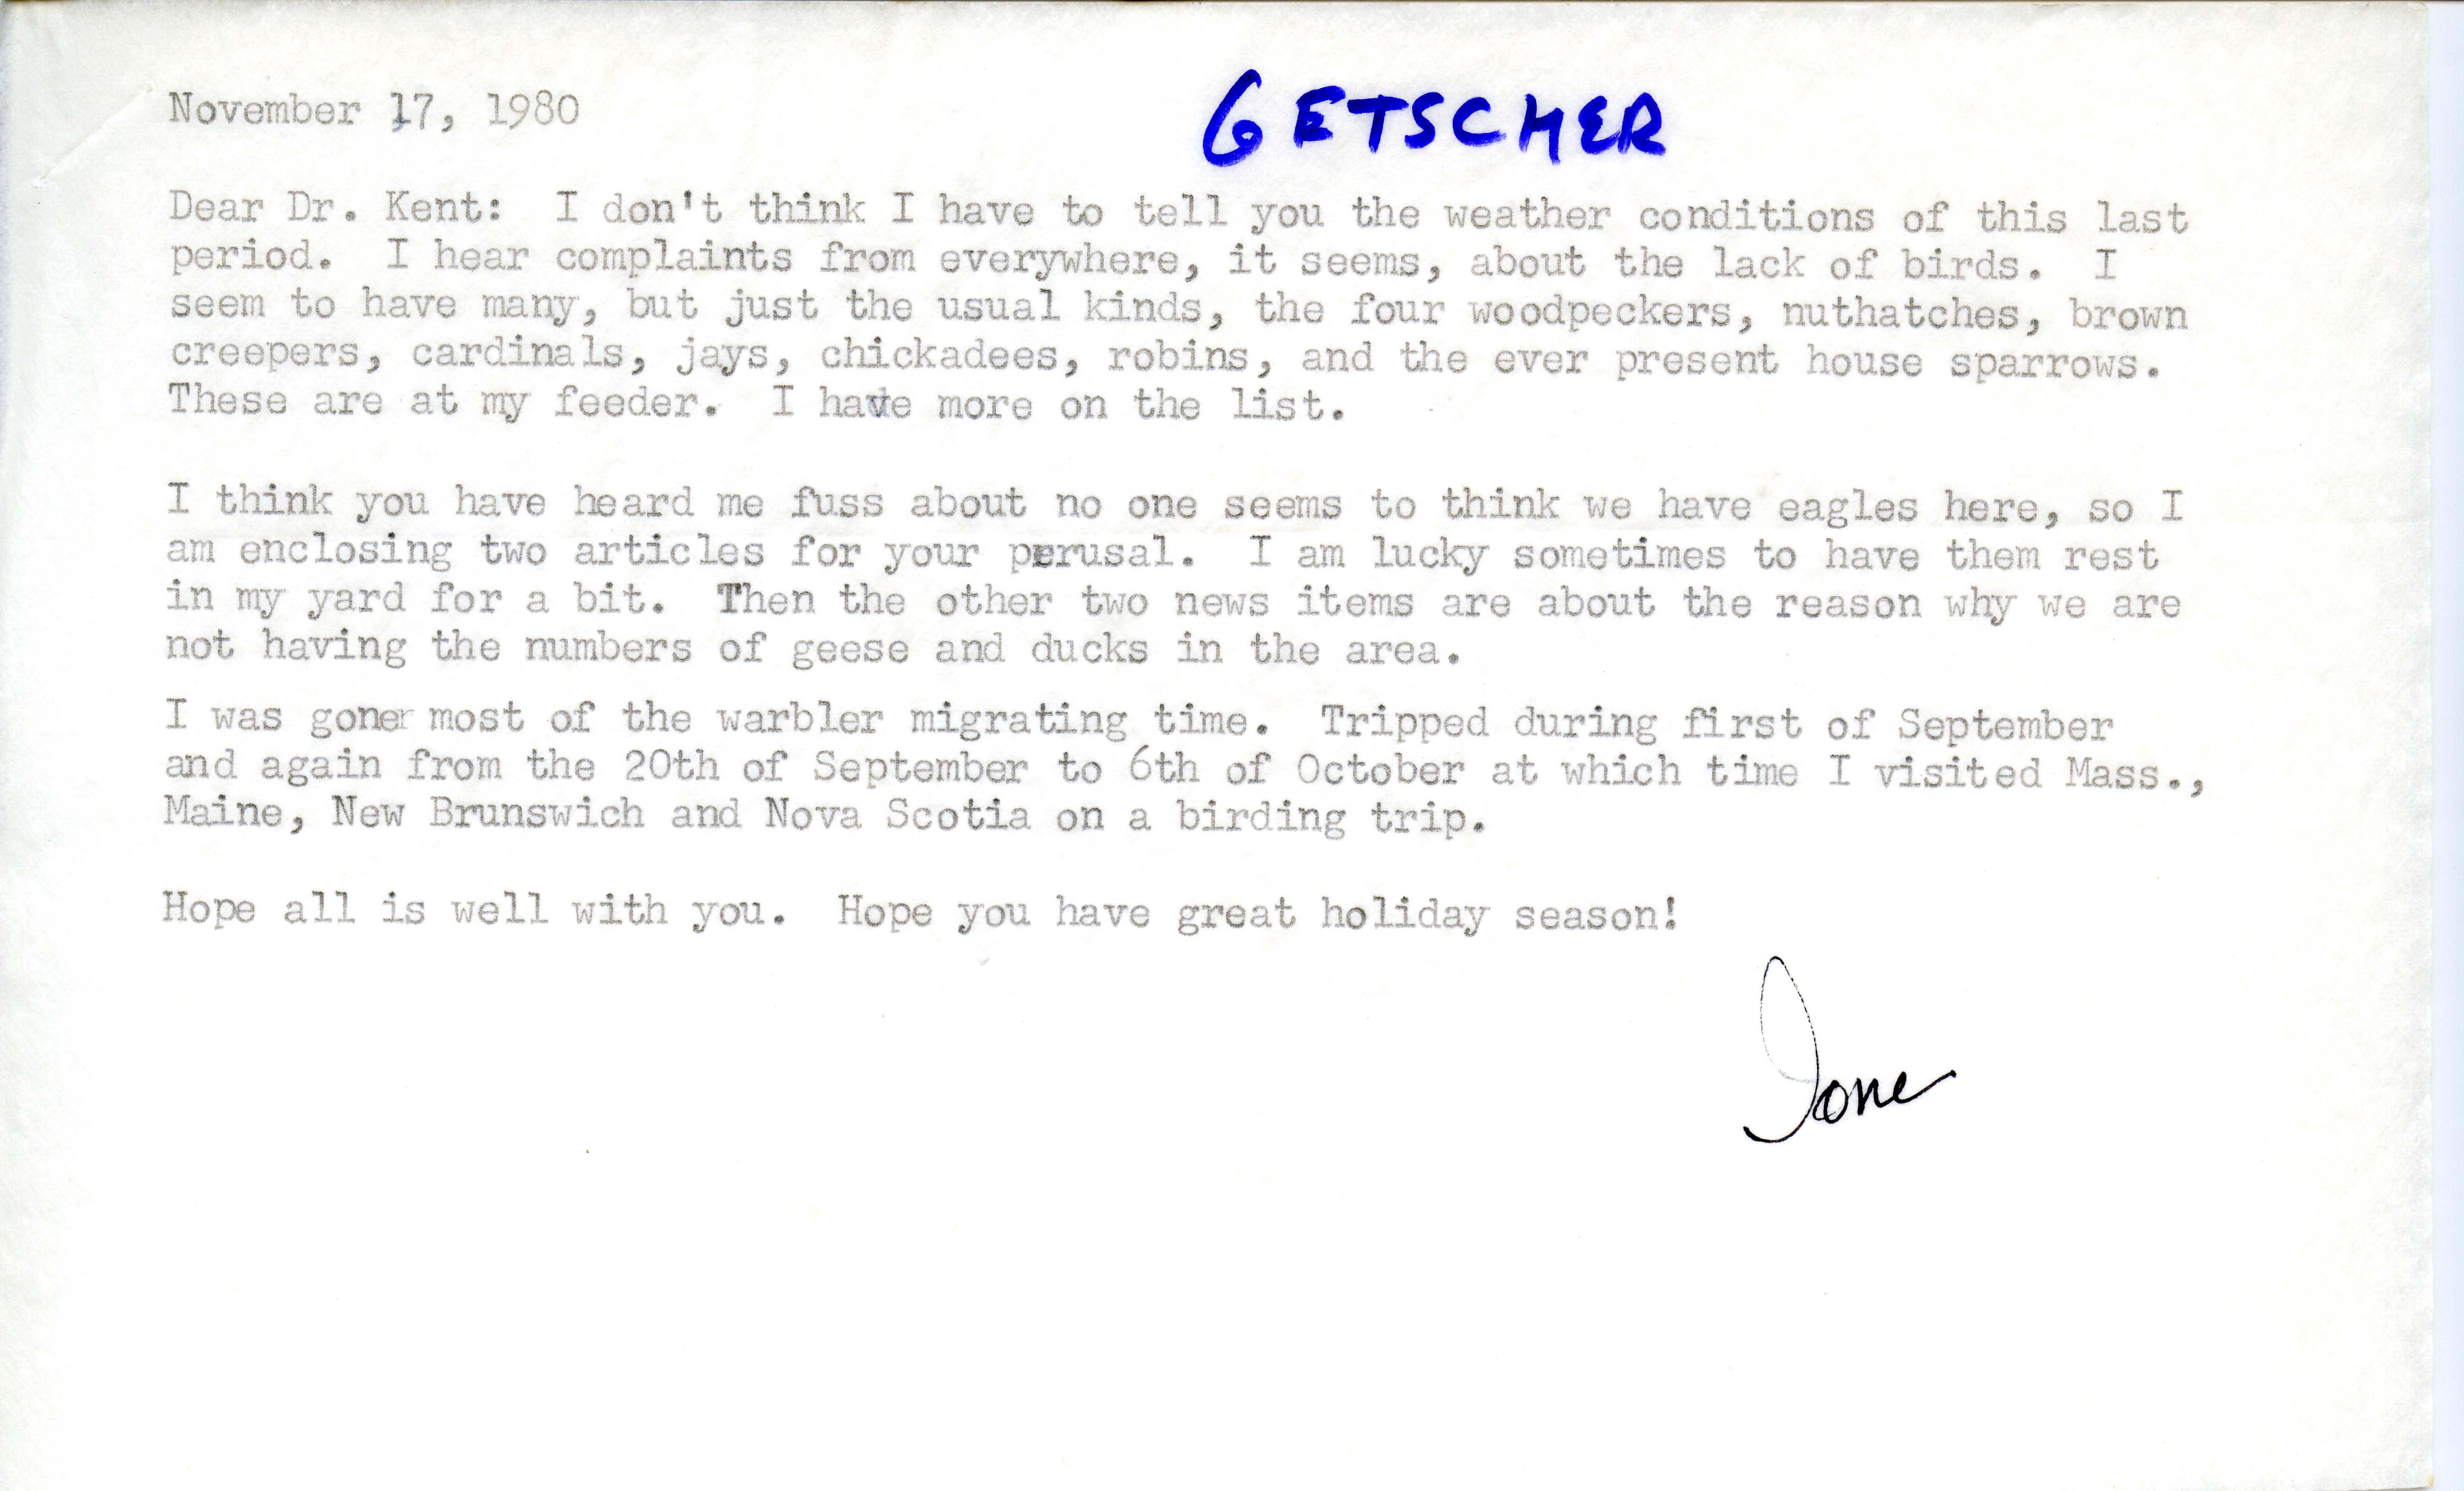 Ione Getscher letter to Thomas Kent regarding birds sighted, November 17, 1980